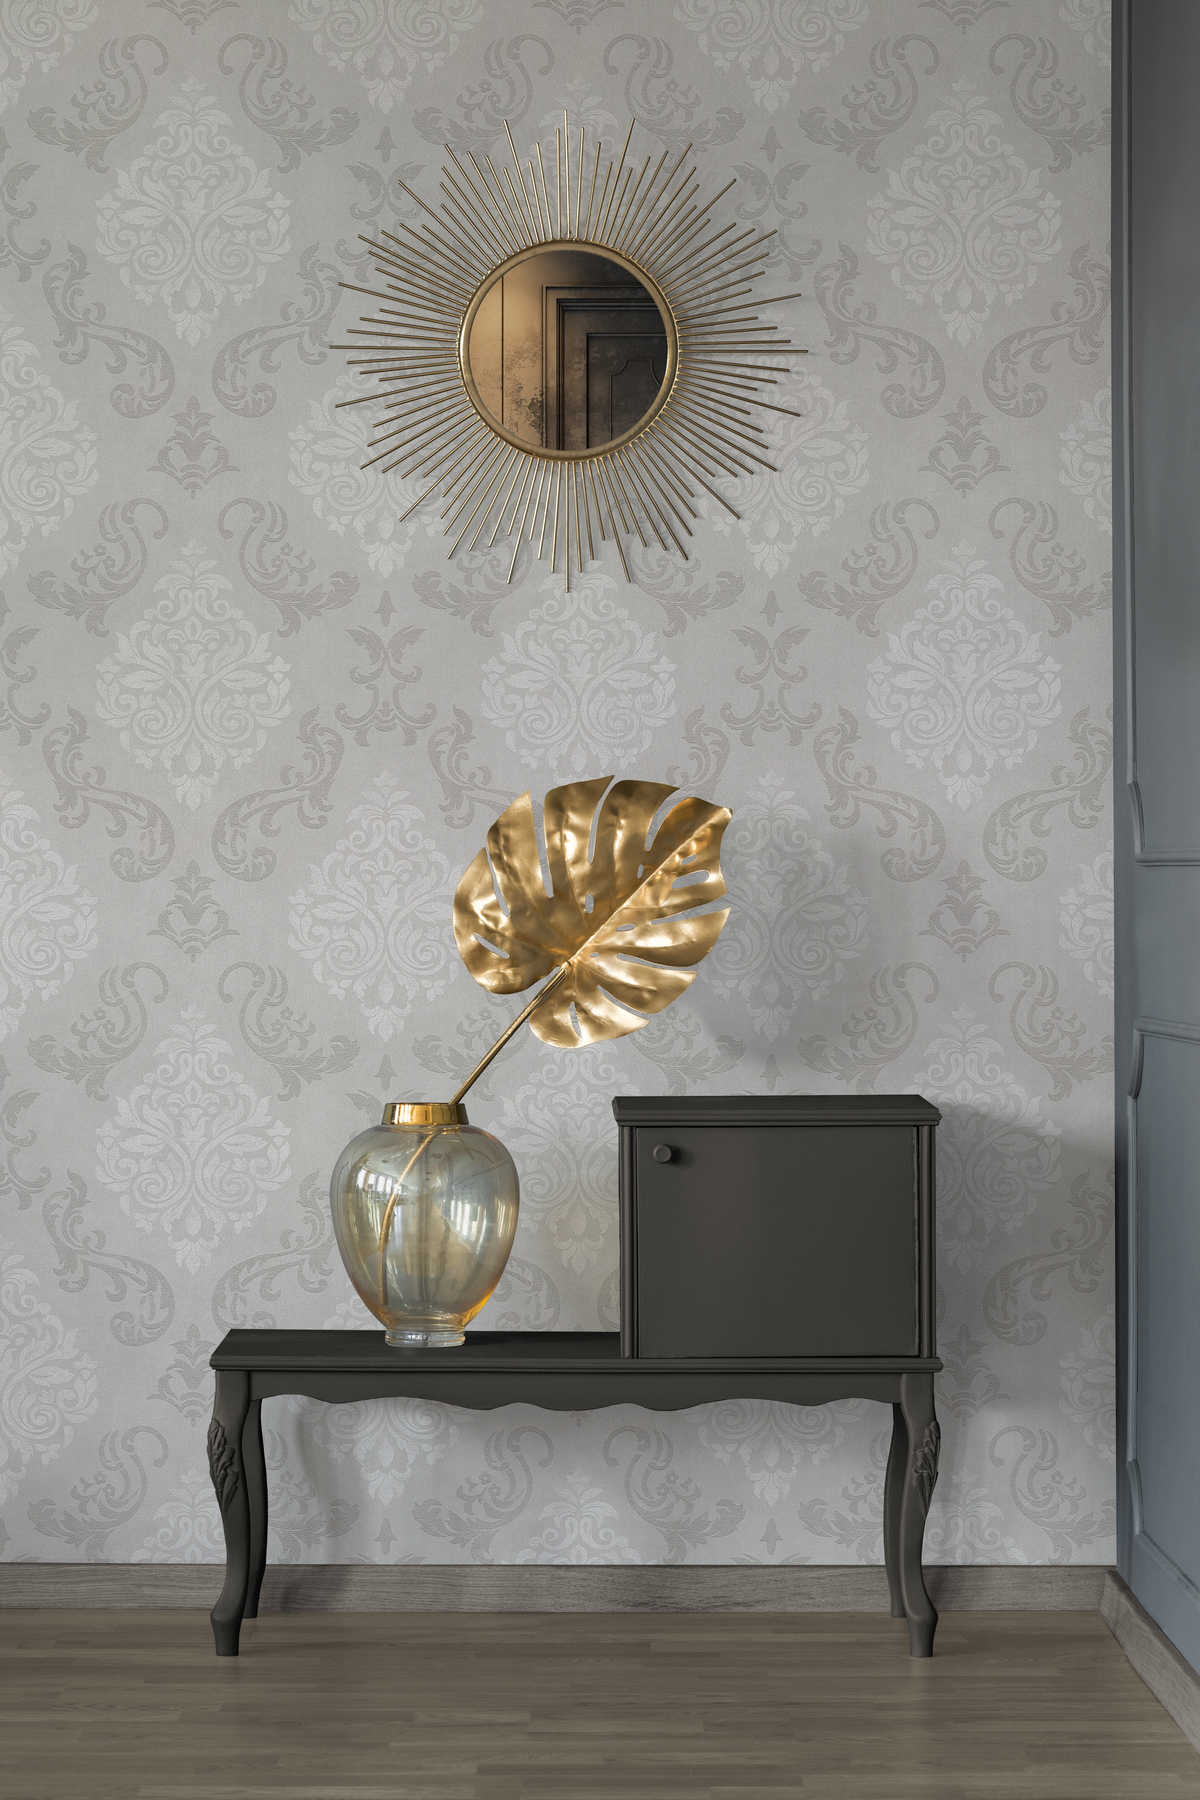             Ornamente Tapete Barock Stil mit Glitzereffekt – Beige, Creme, Metallic
        